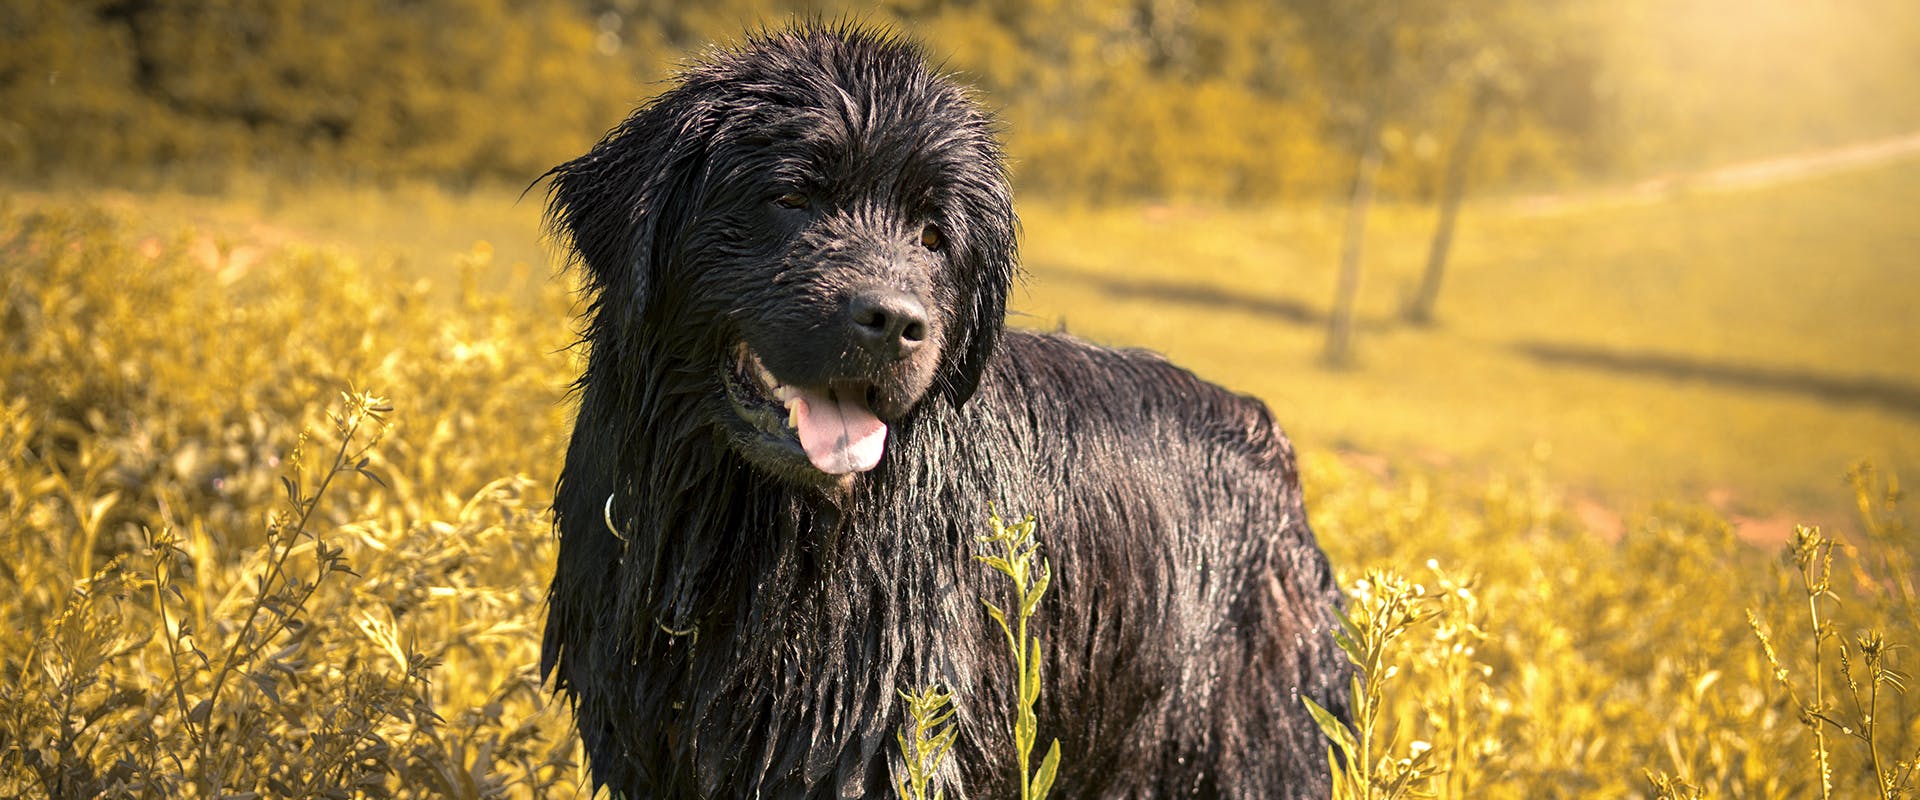 A wet Newfoundland dog, standing in a field